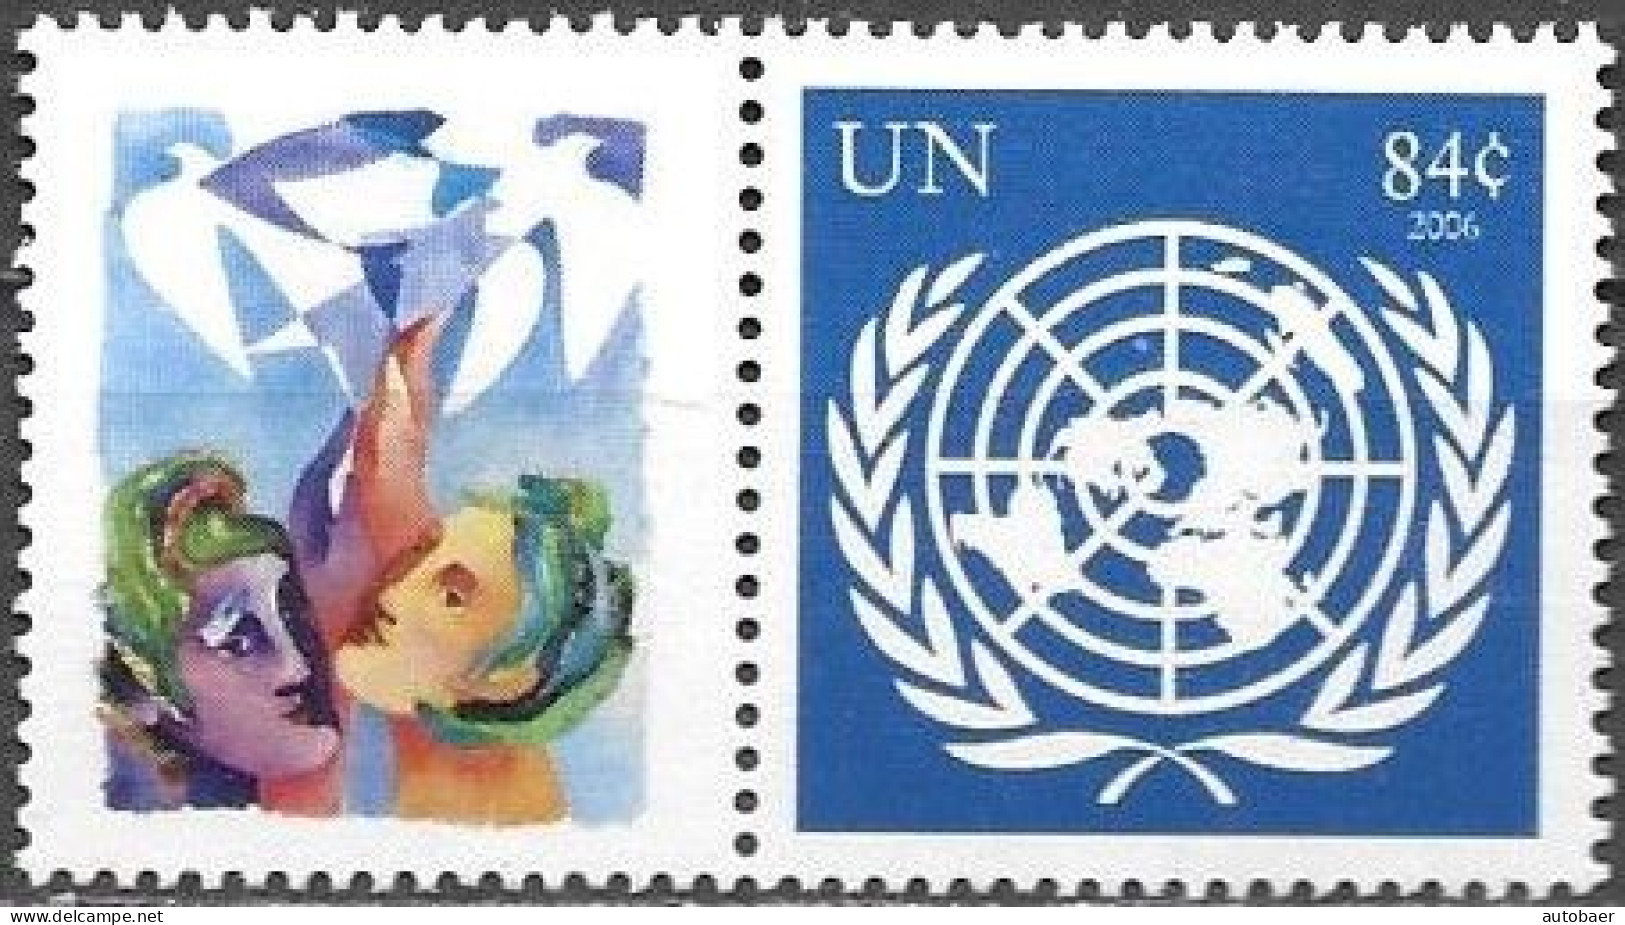 United Nations UNO UN Vereinte Nationen New York 2006 Greetings Mi.No.1032 Label MNH ** Neuf - Nuovi